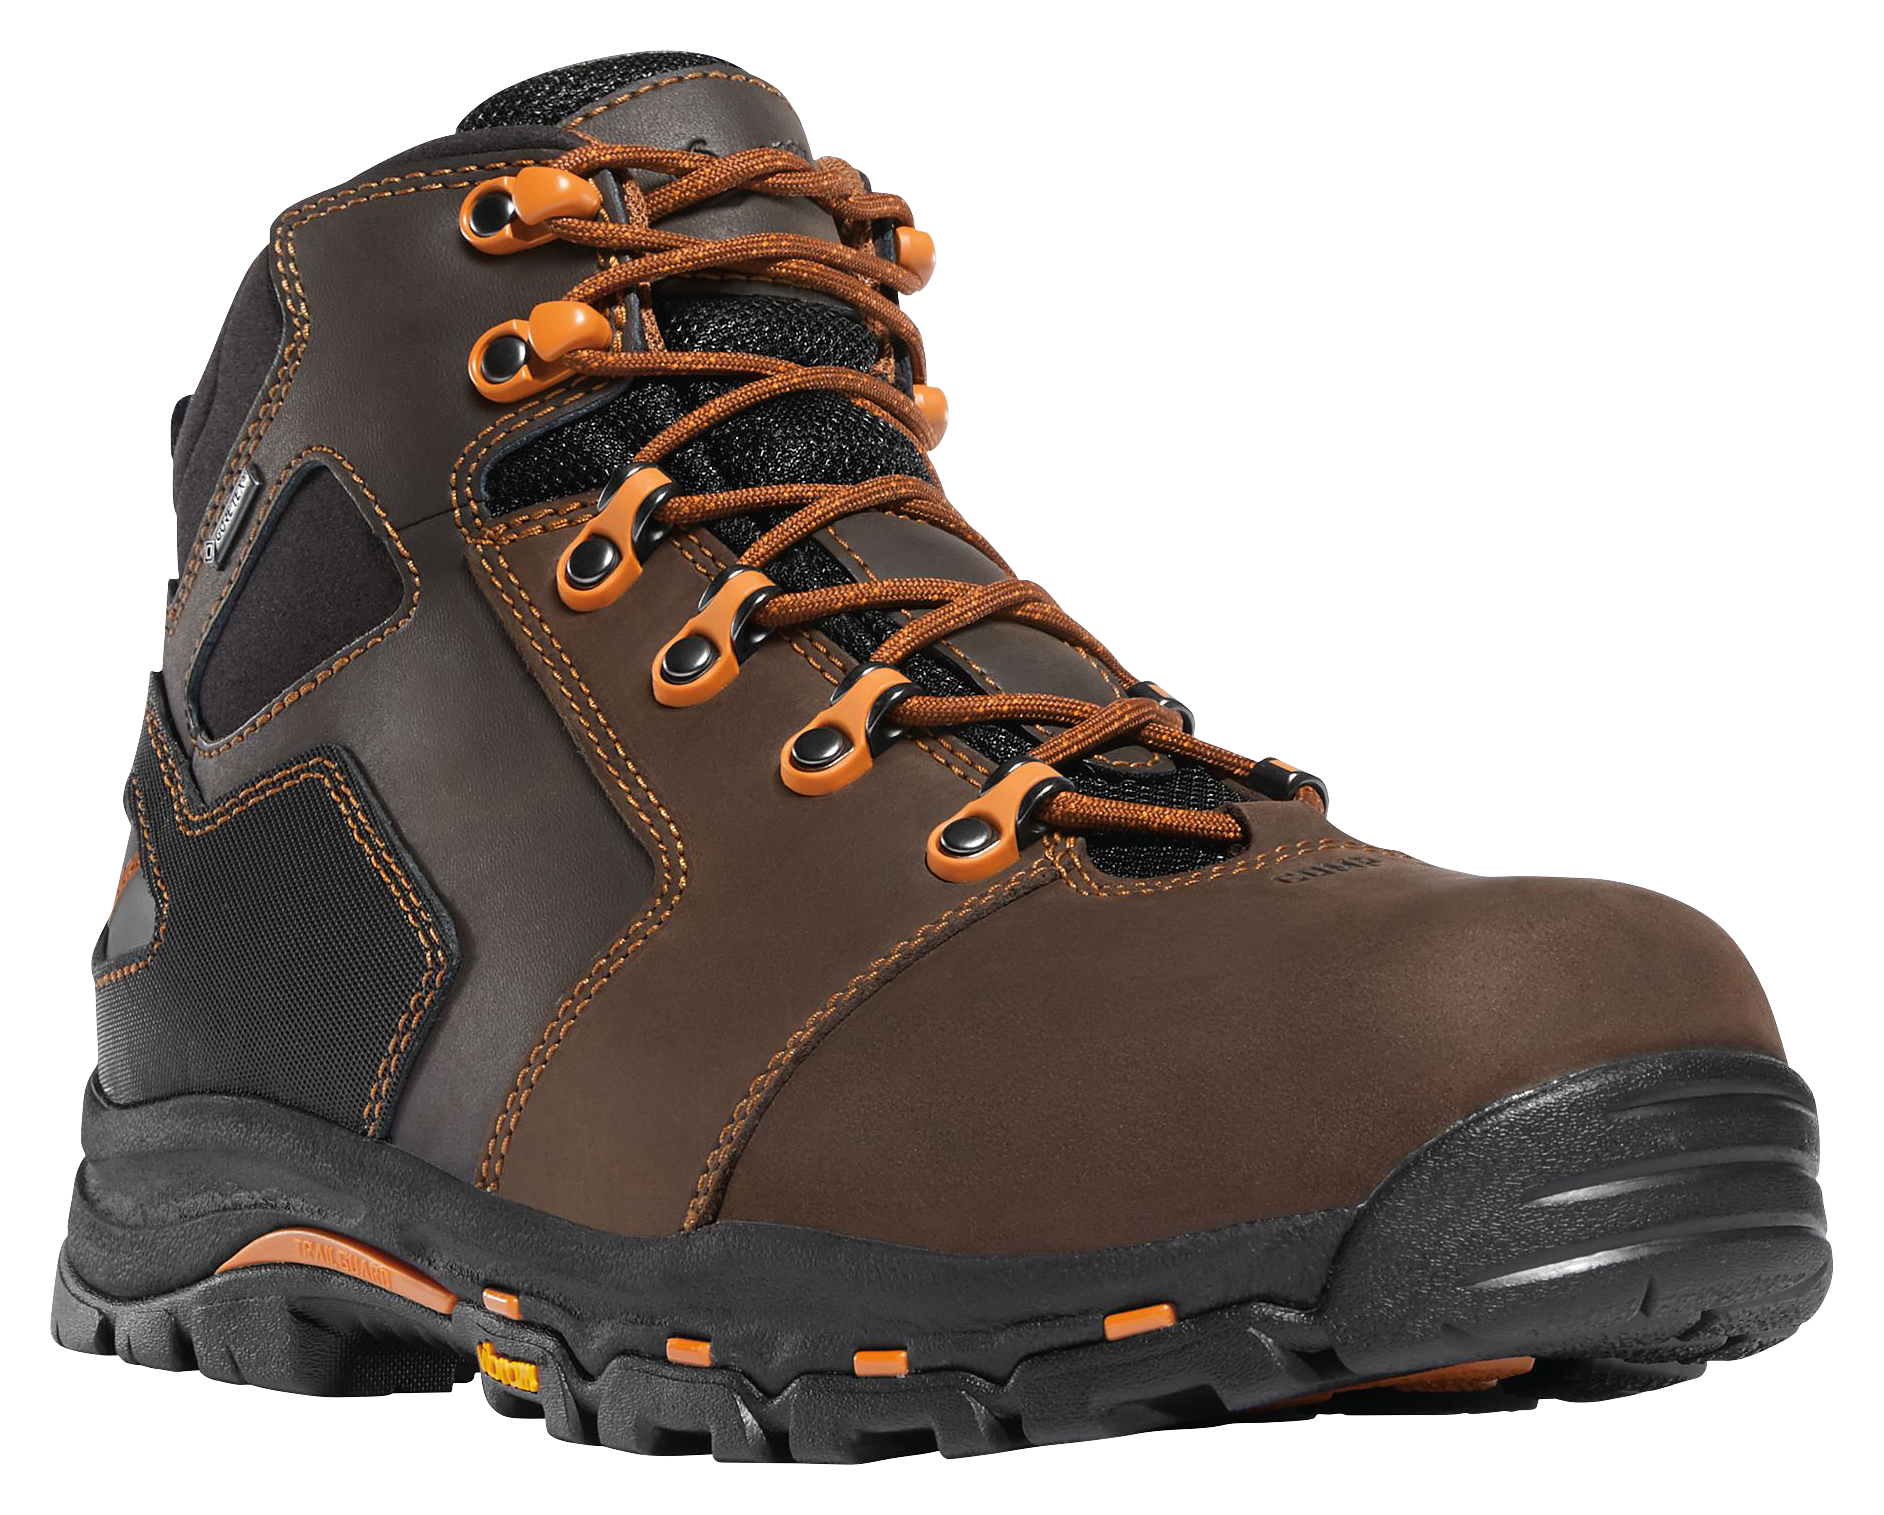 Danner Vicious 4.5'' GORE-TEX EH Work Boots for Men - Brown/Orange - 12M